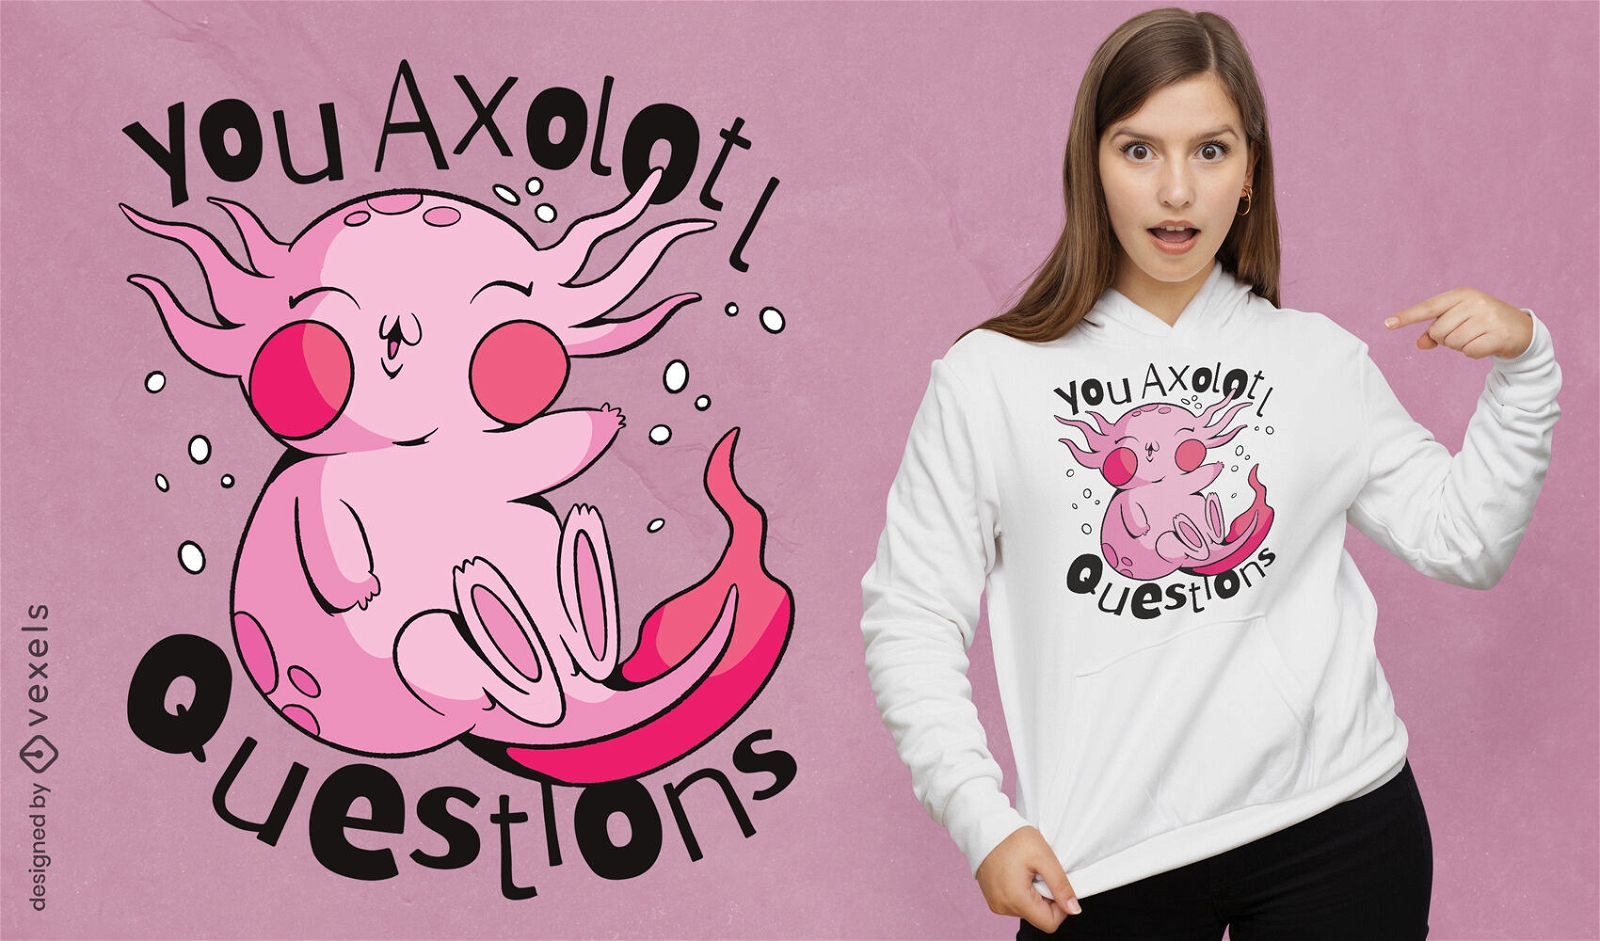 Axolotl hinterfragt lustiges T-Shirt Design